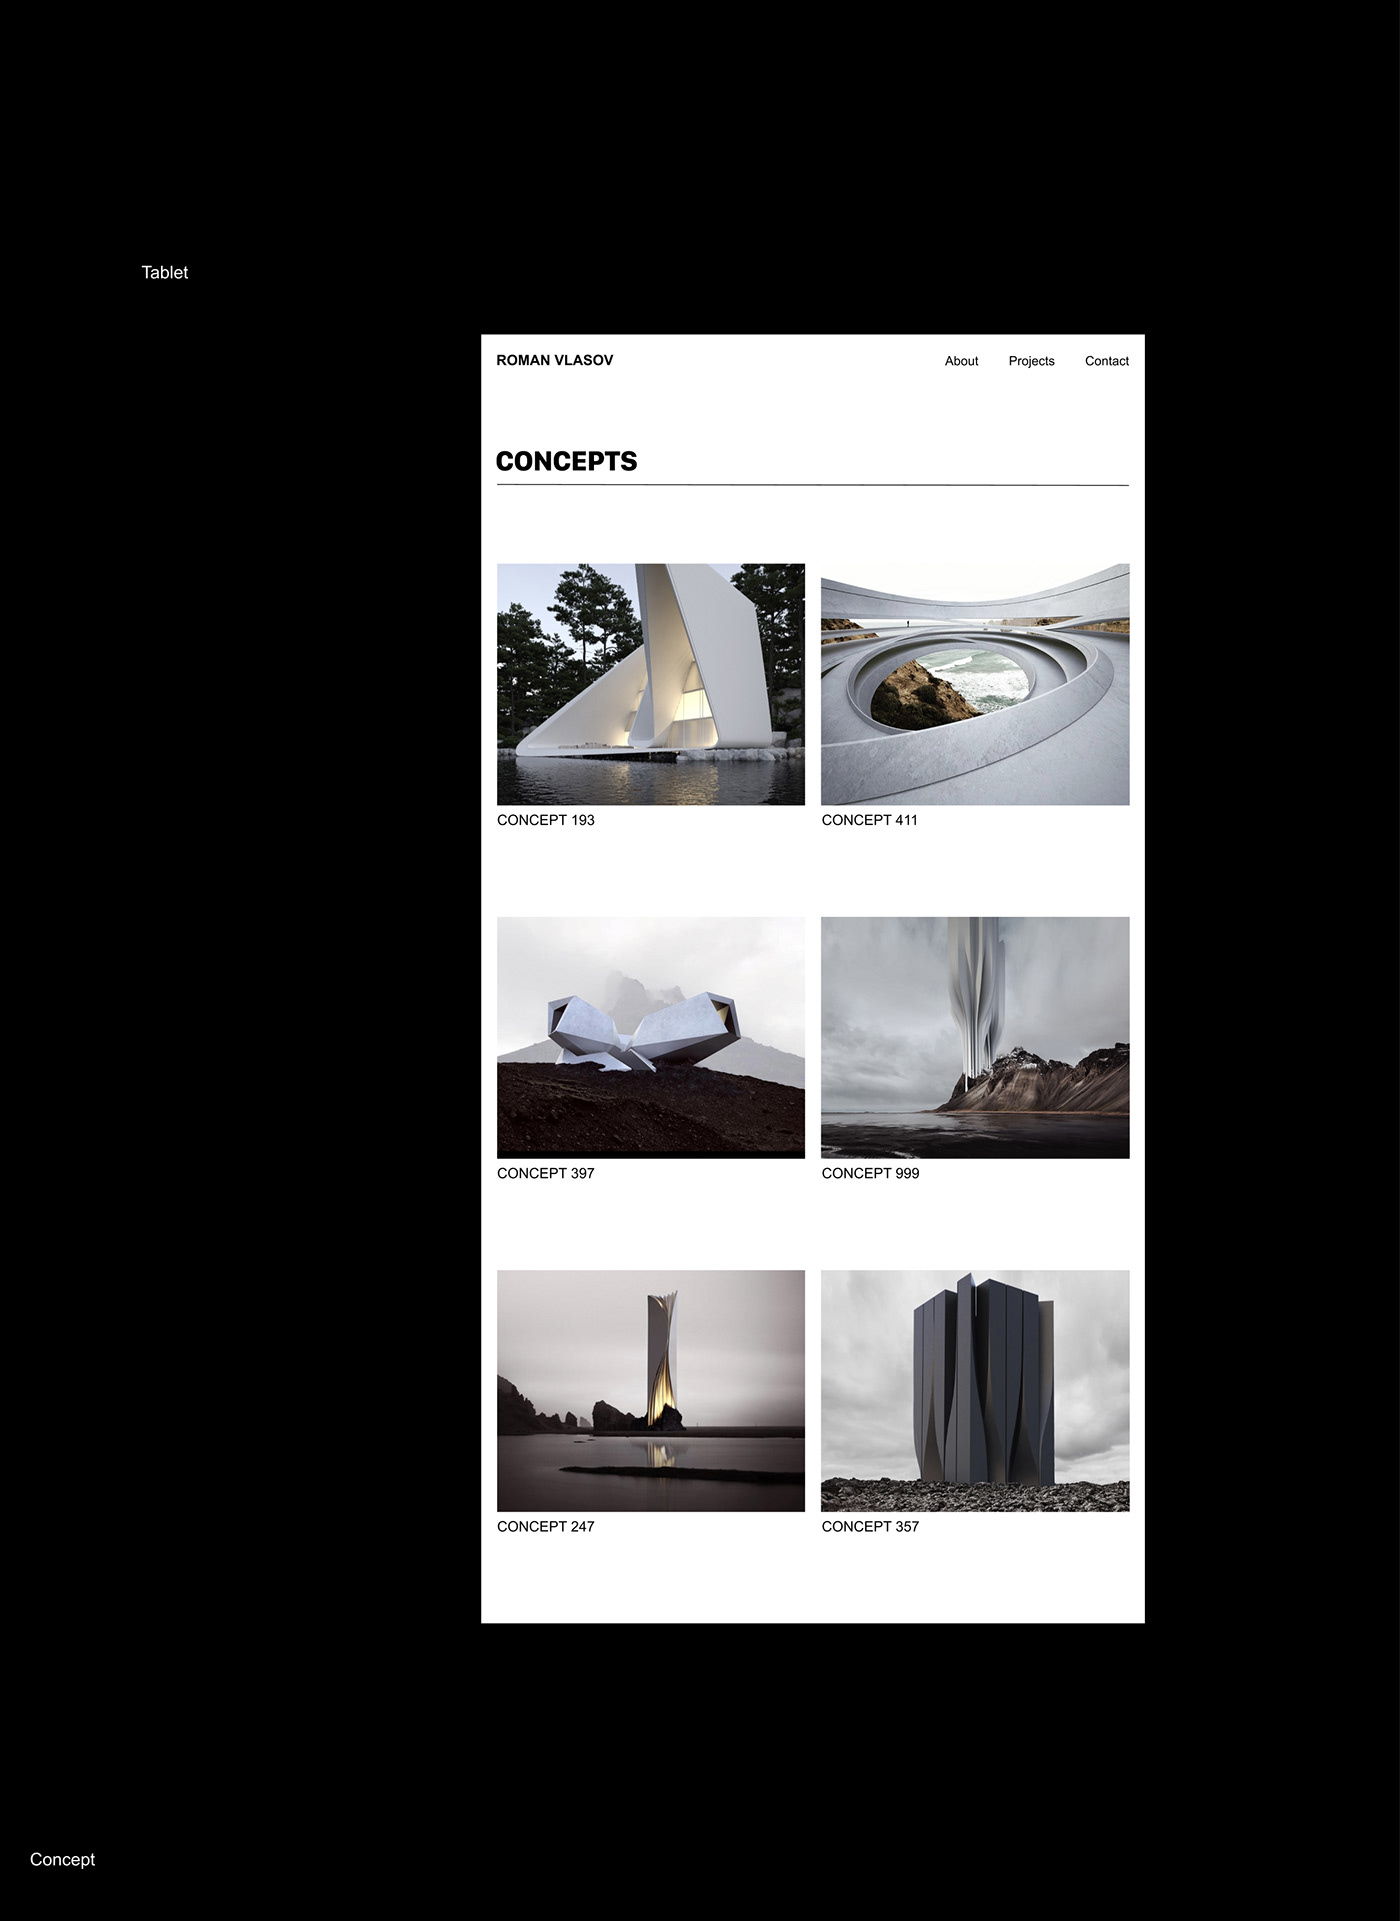 architect clean FUTURISM minimal Minimalism romanvlasov user experience user interface Website websitedesign